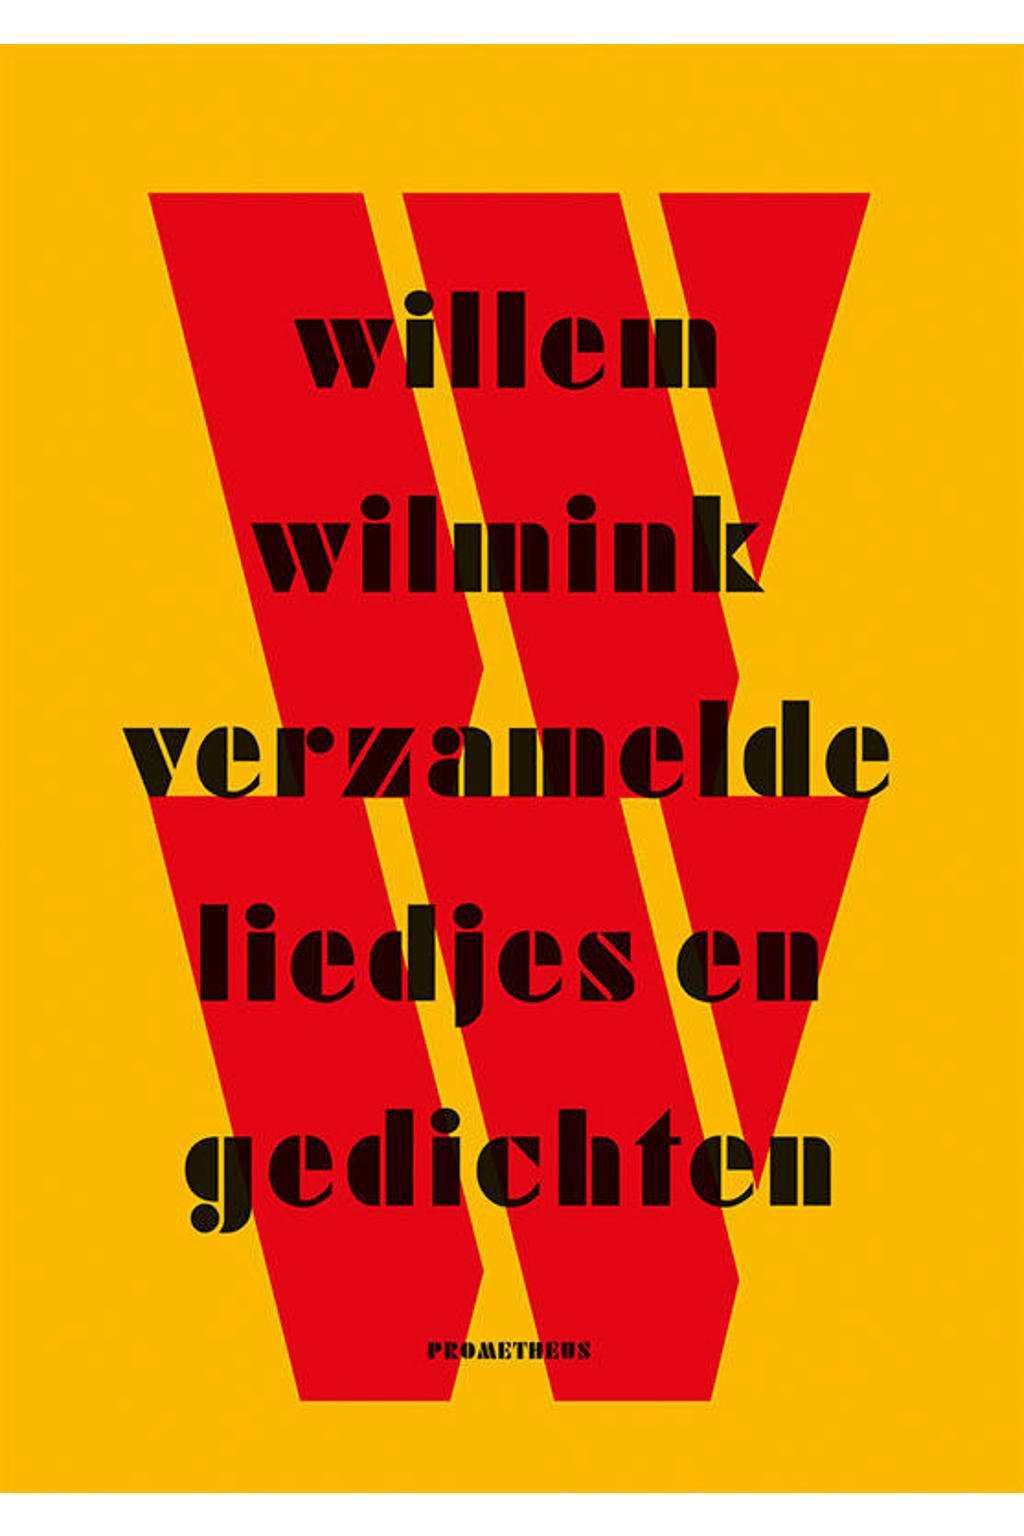 Verzamelde liedjes en gedichten - Willem Wilmink